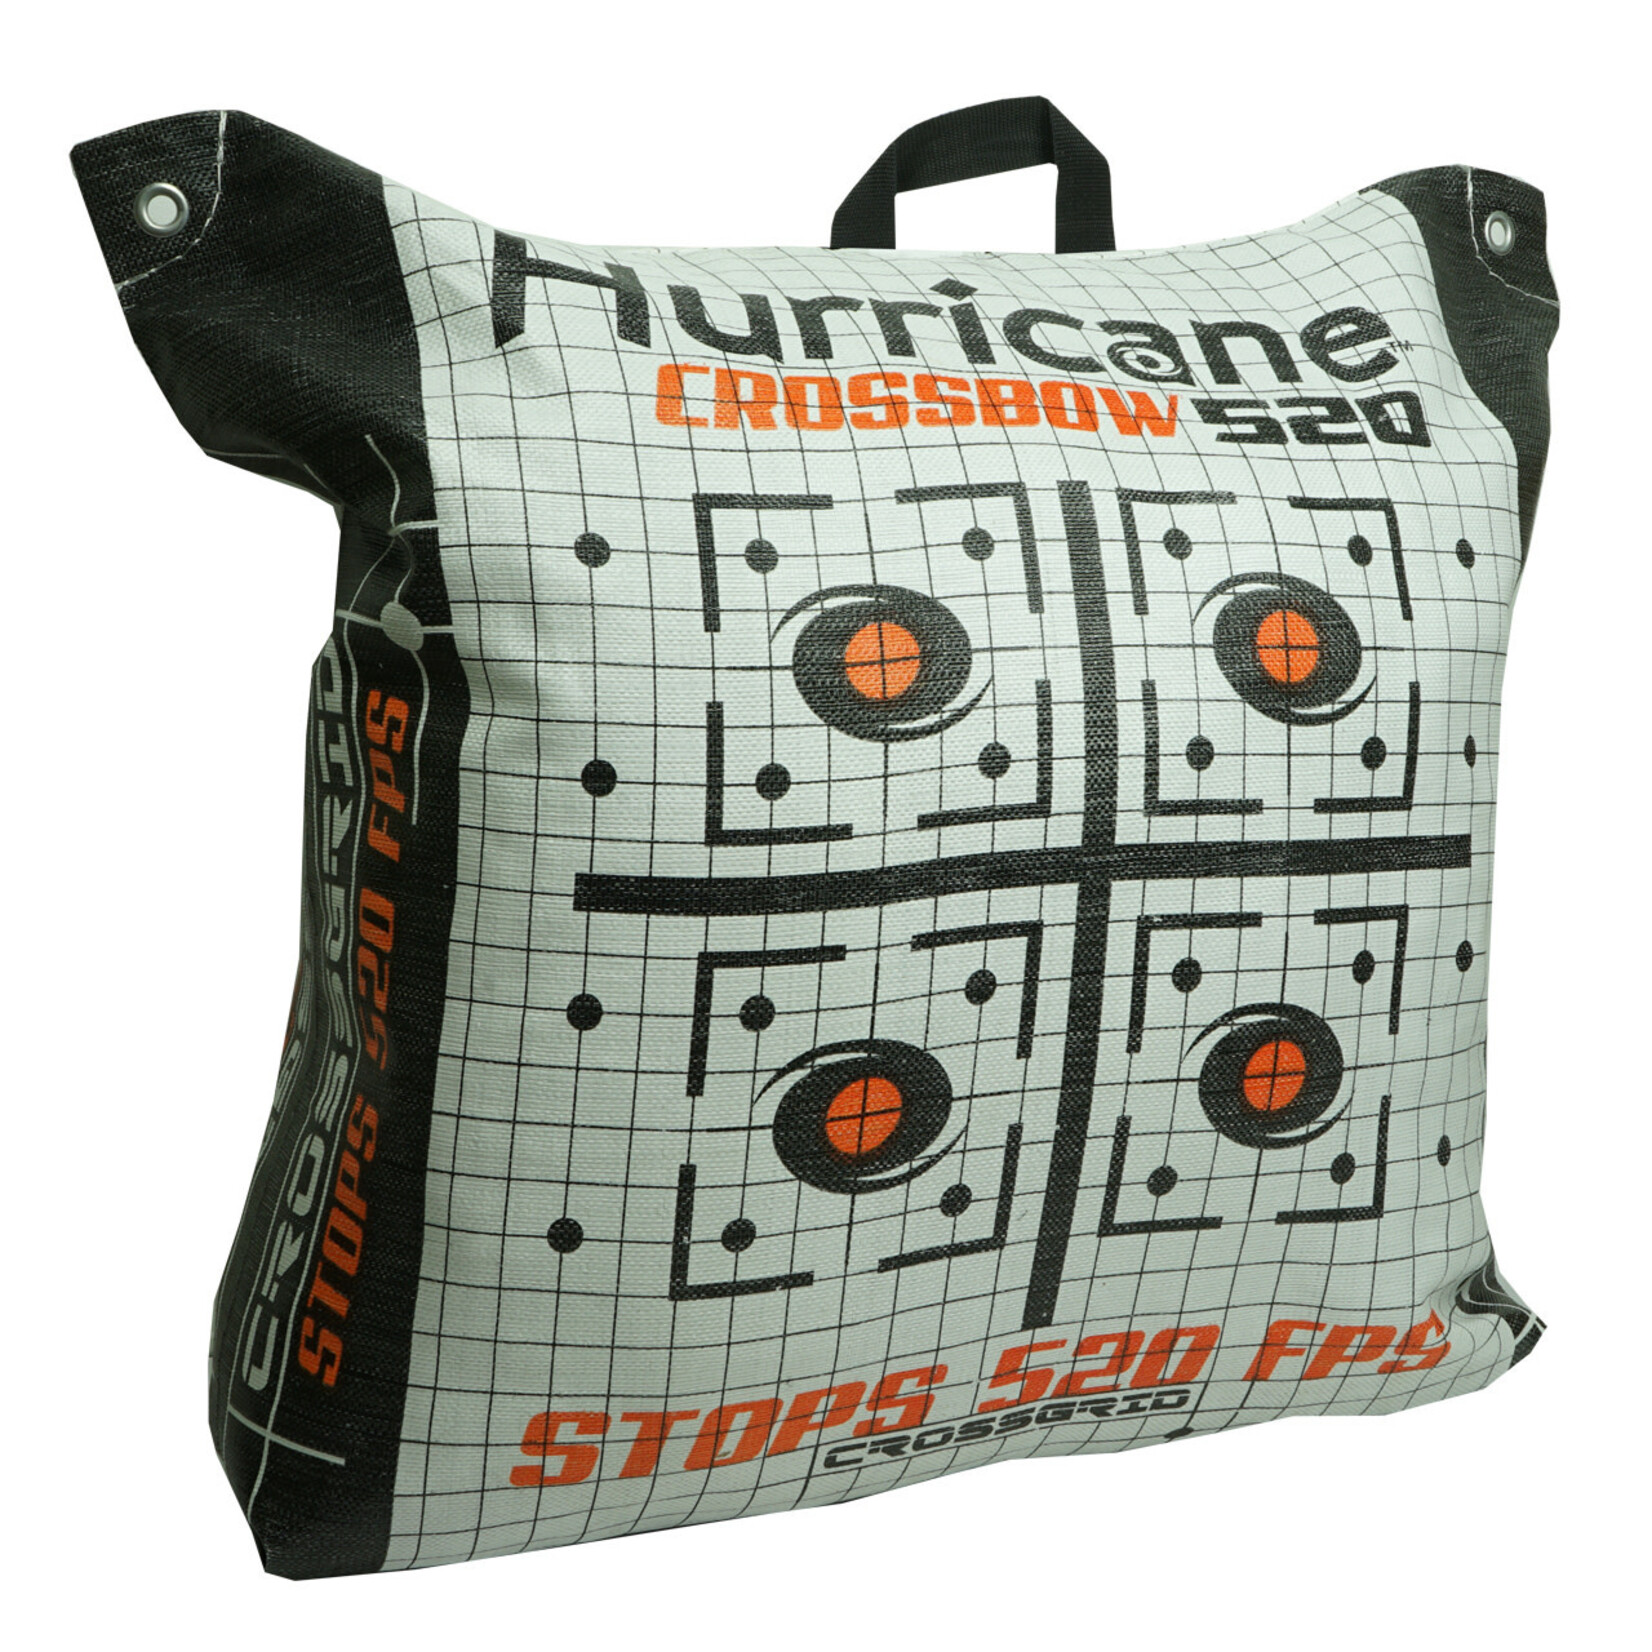 Field Logic Hurricane H21 Crossbow Bag Target 520 fps